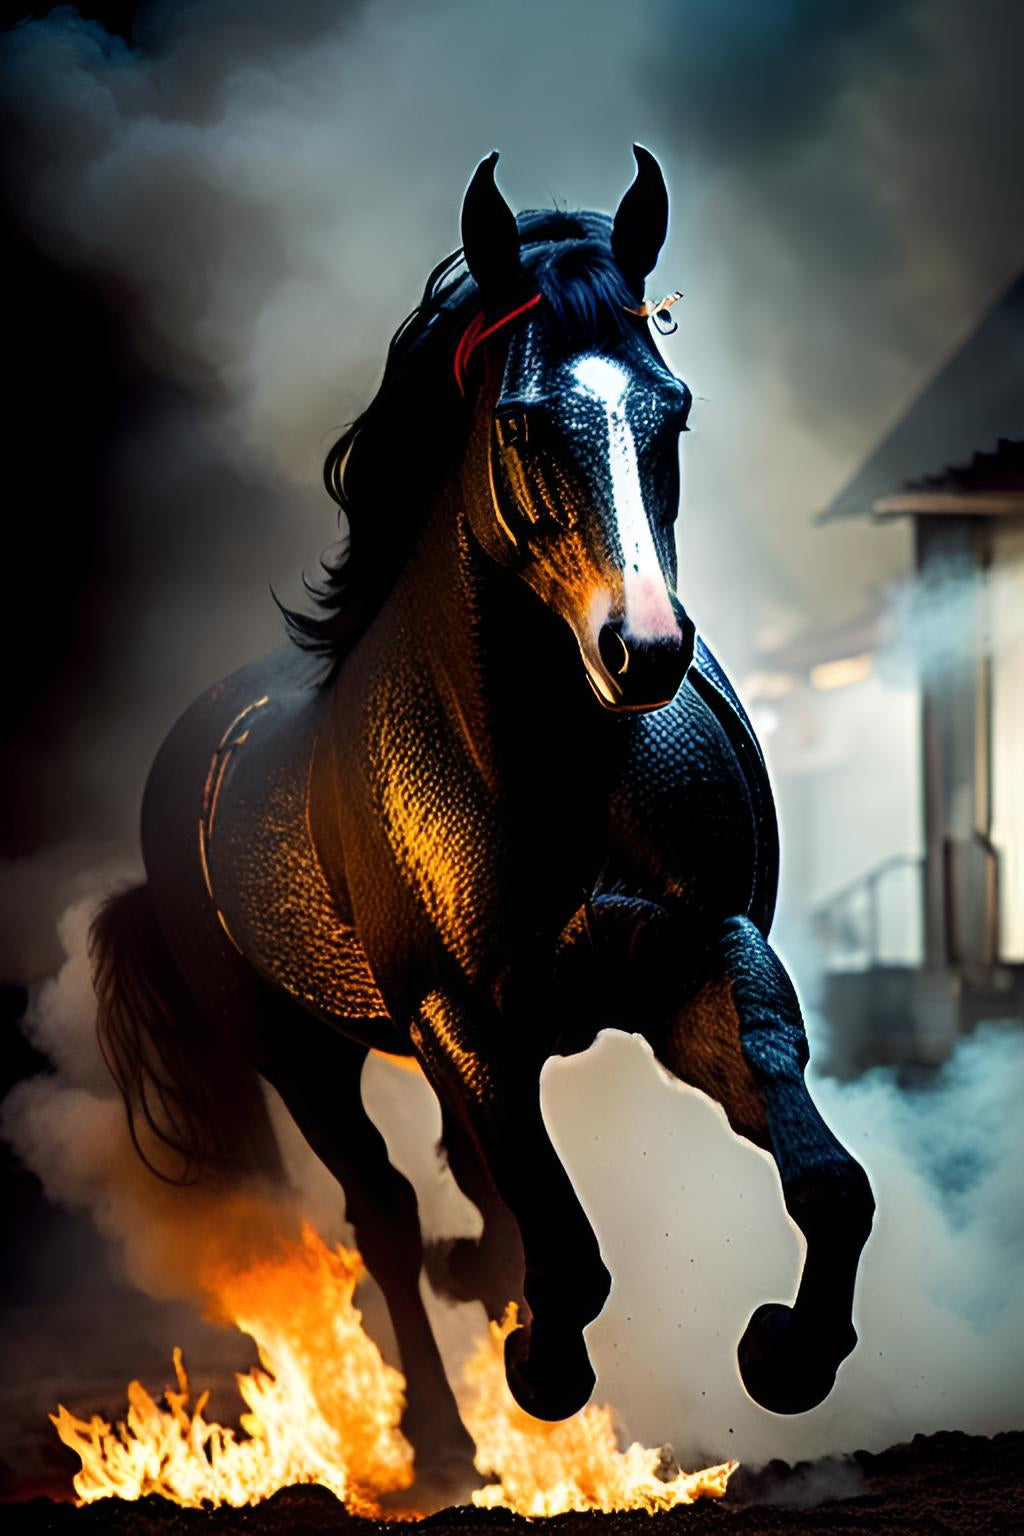 dark horse fire on ground running smokey bleak